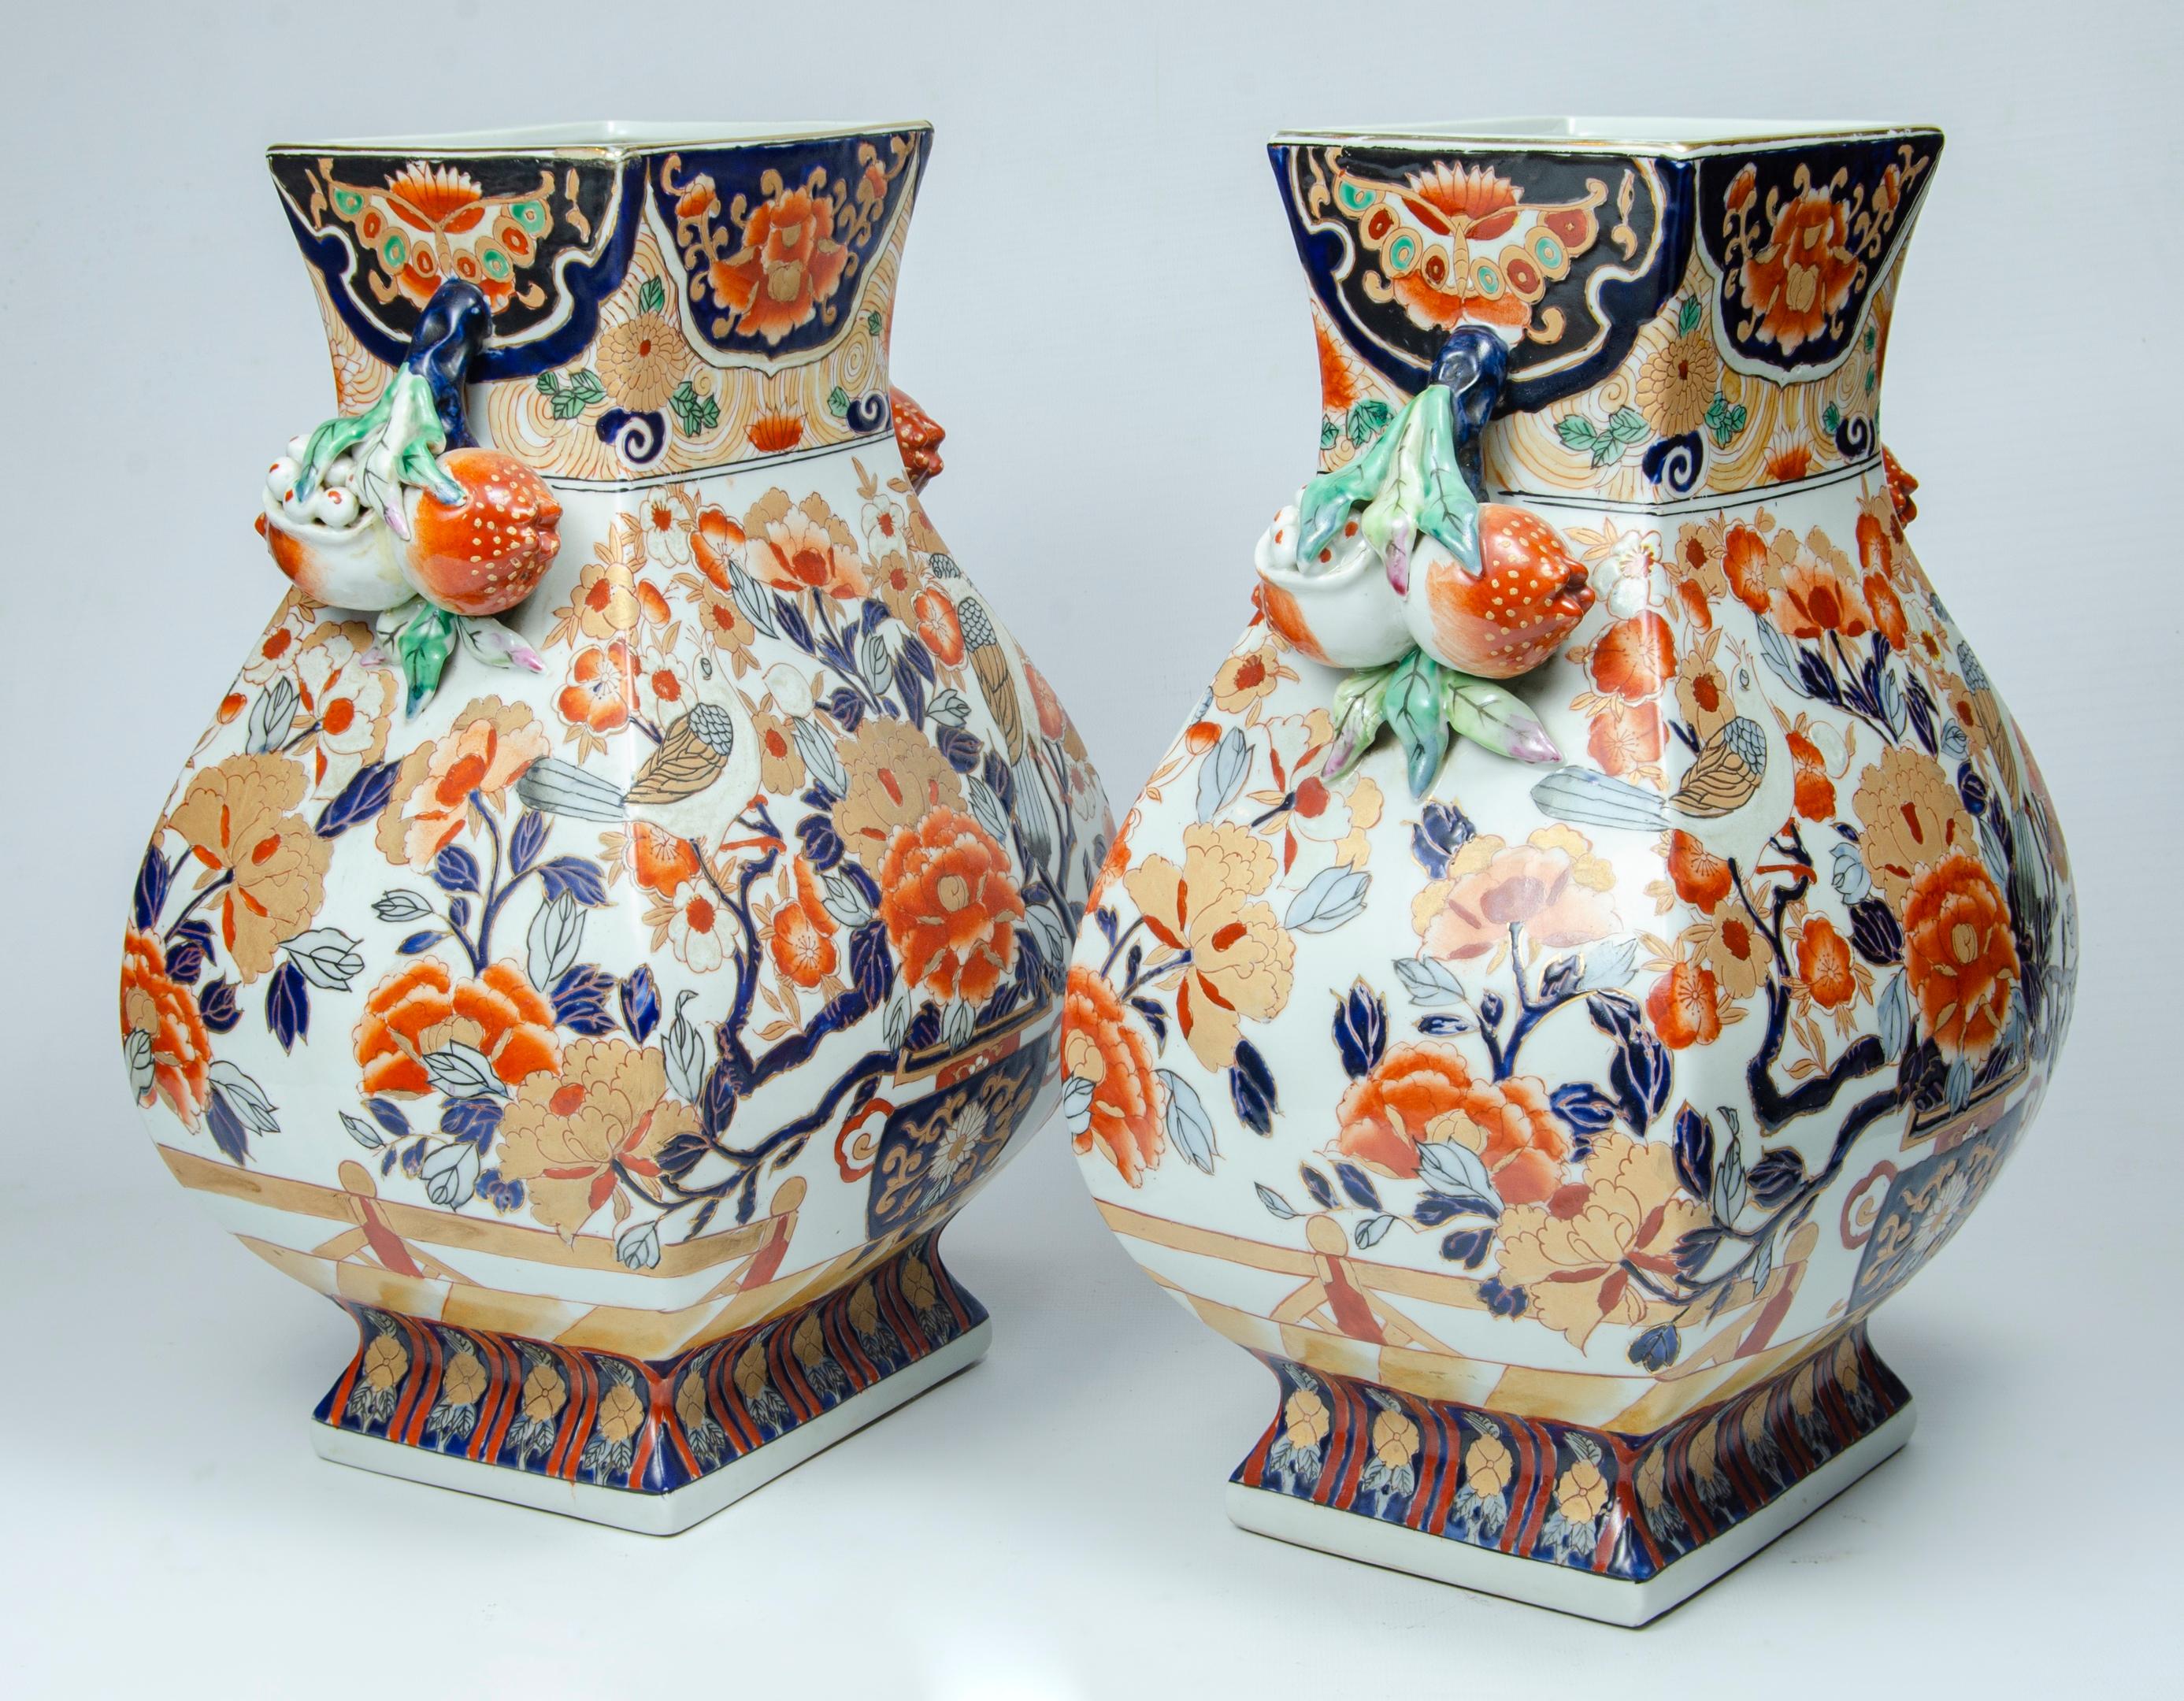 Pair of Imari ceramic vases
floral decoration, circa 1900
without restorations and in perfect condition
Origin China.